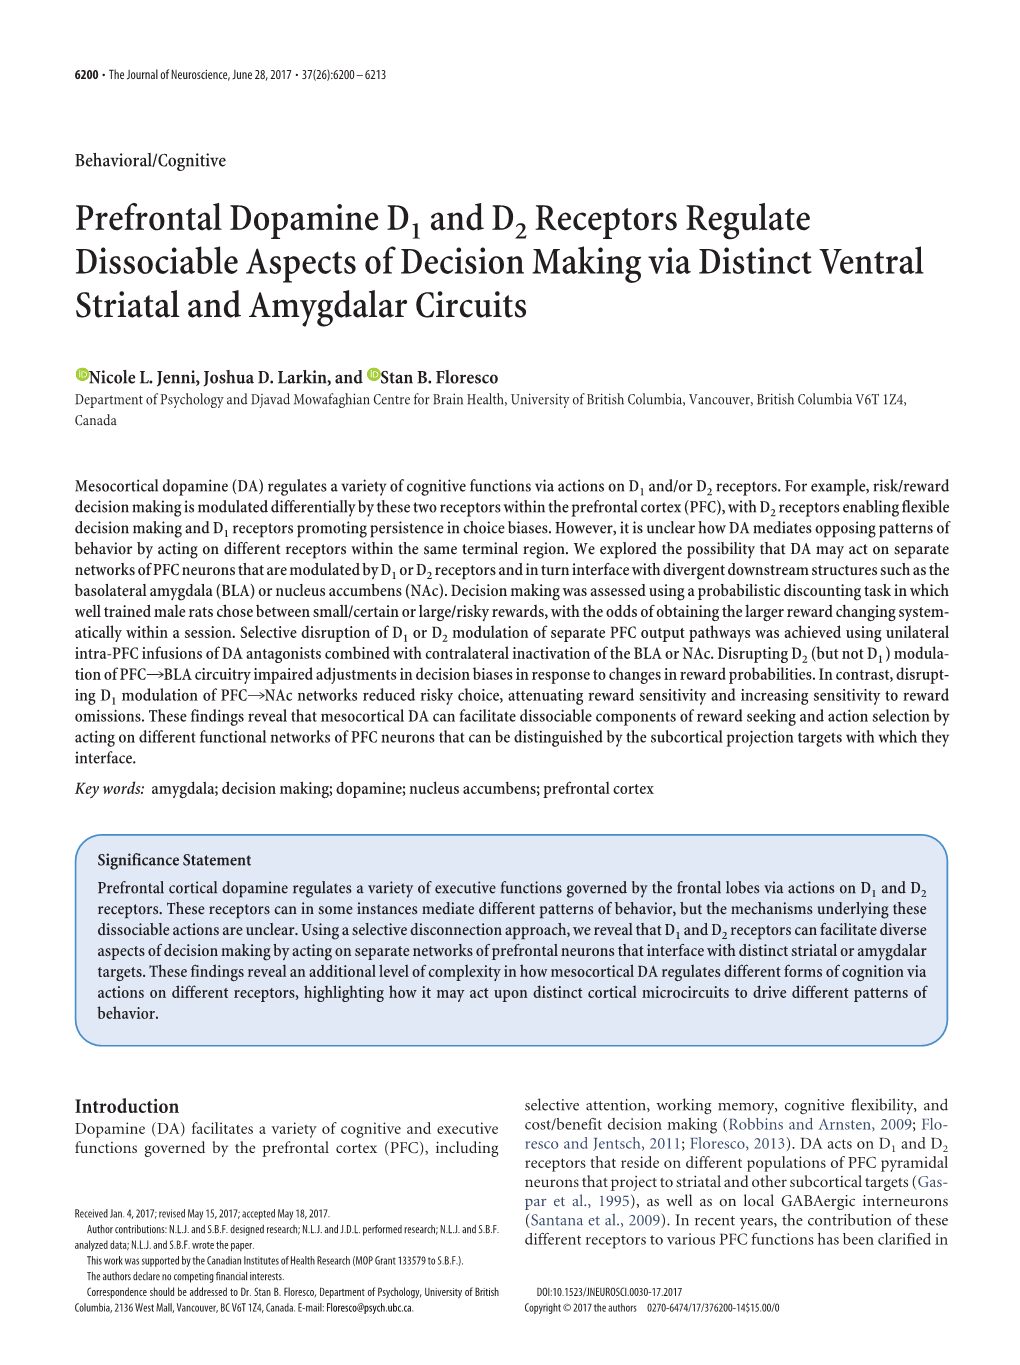 Prefrontal Dopamine D1 and D2 Receptors Regulate Dissociable Aspects of Decision Making Via Distinct Ventral Striatal and Amygdalar Circuits